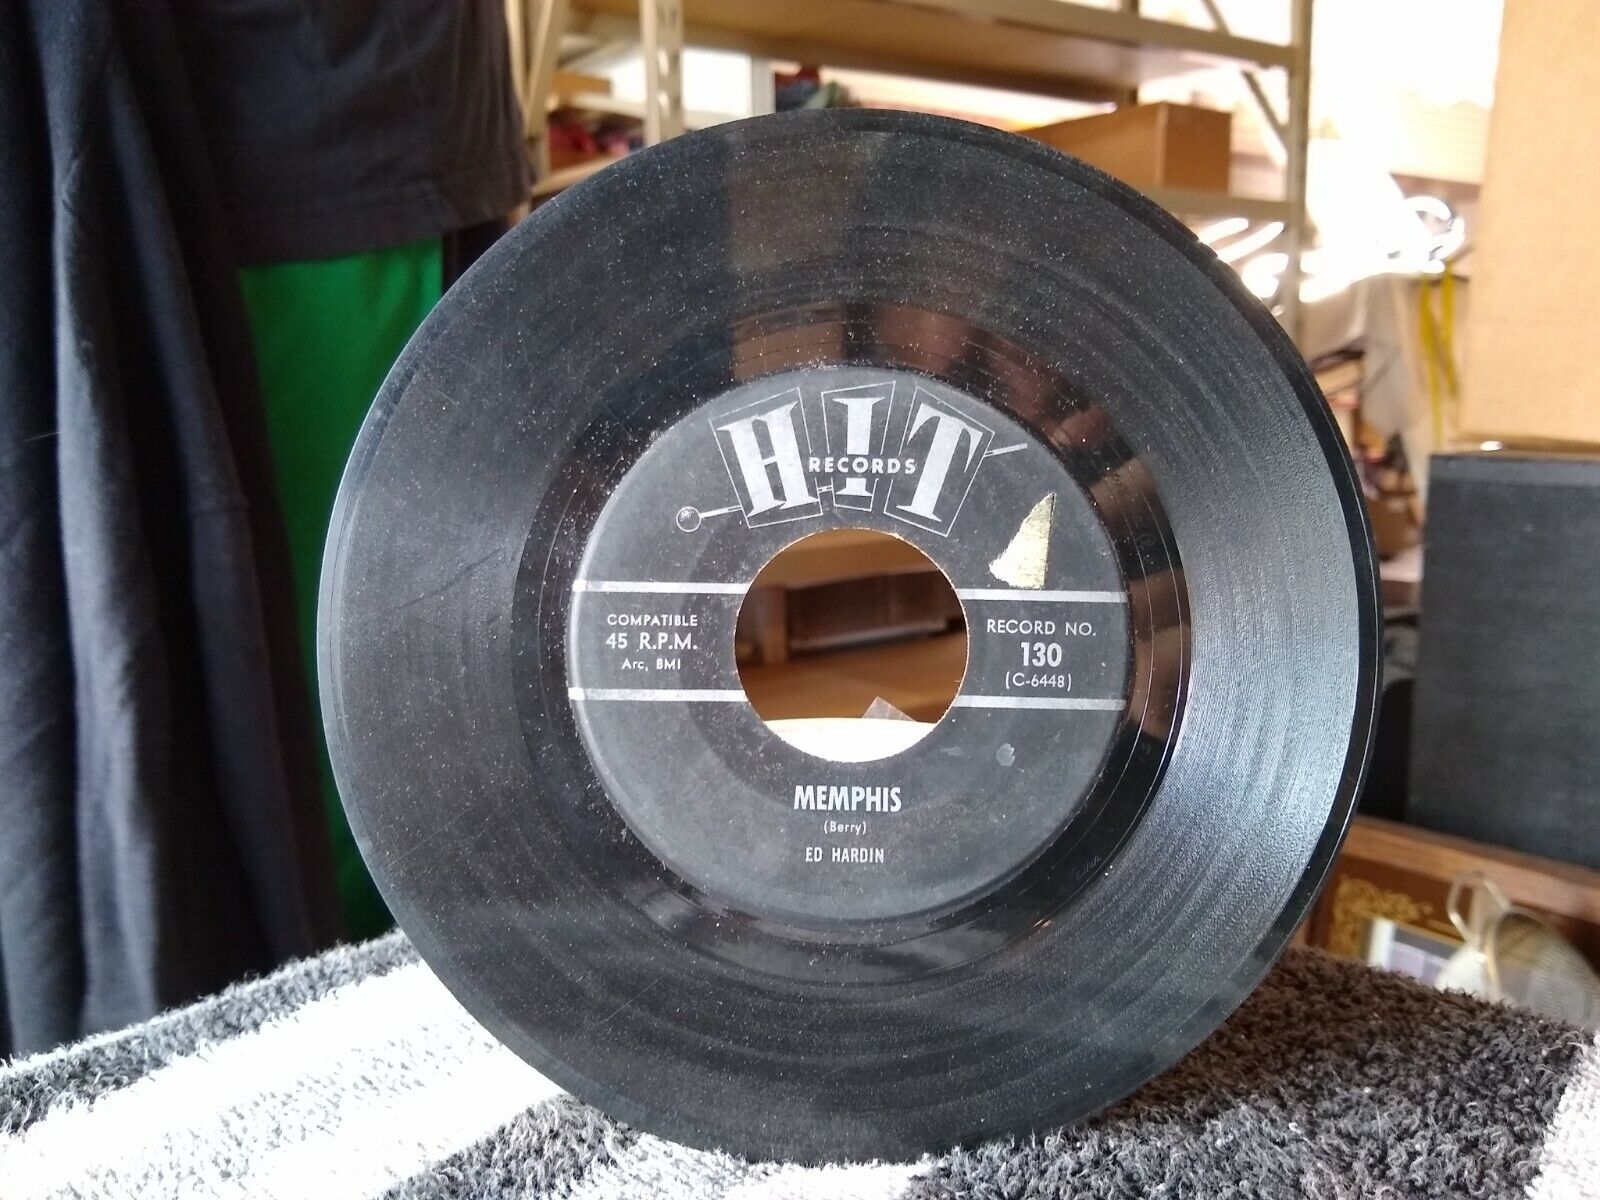 Hit Records - Ed Hardin - Memphis/Bad To Me - 45 RPM